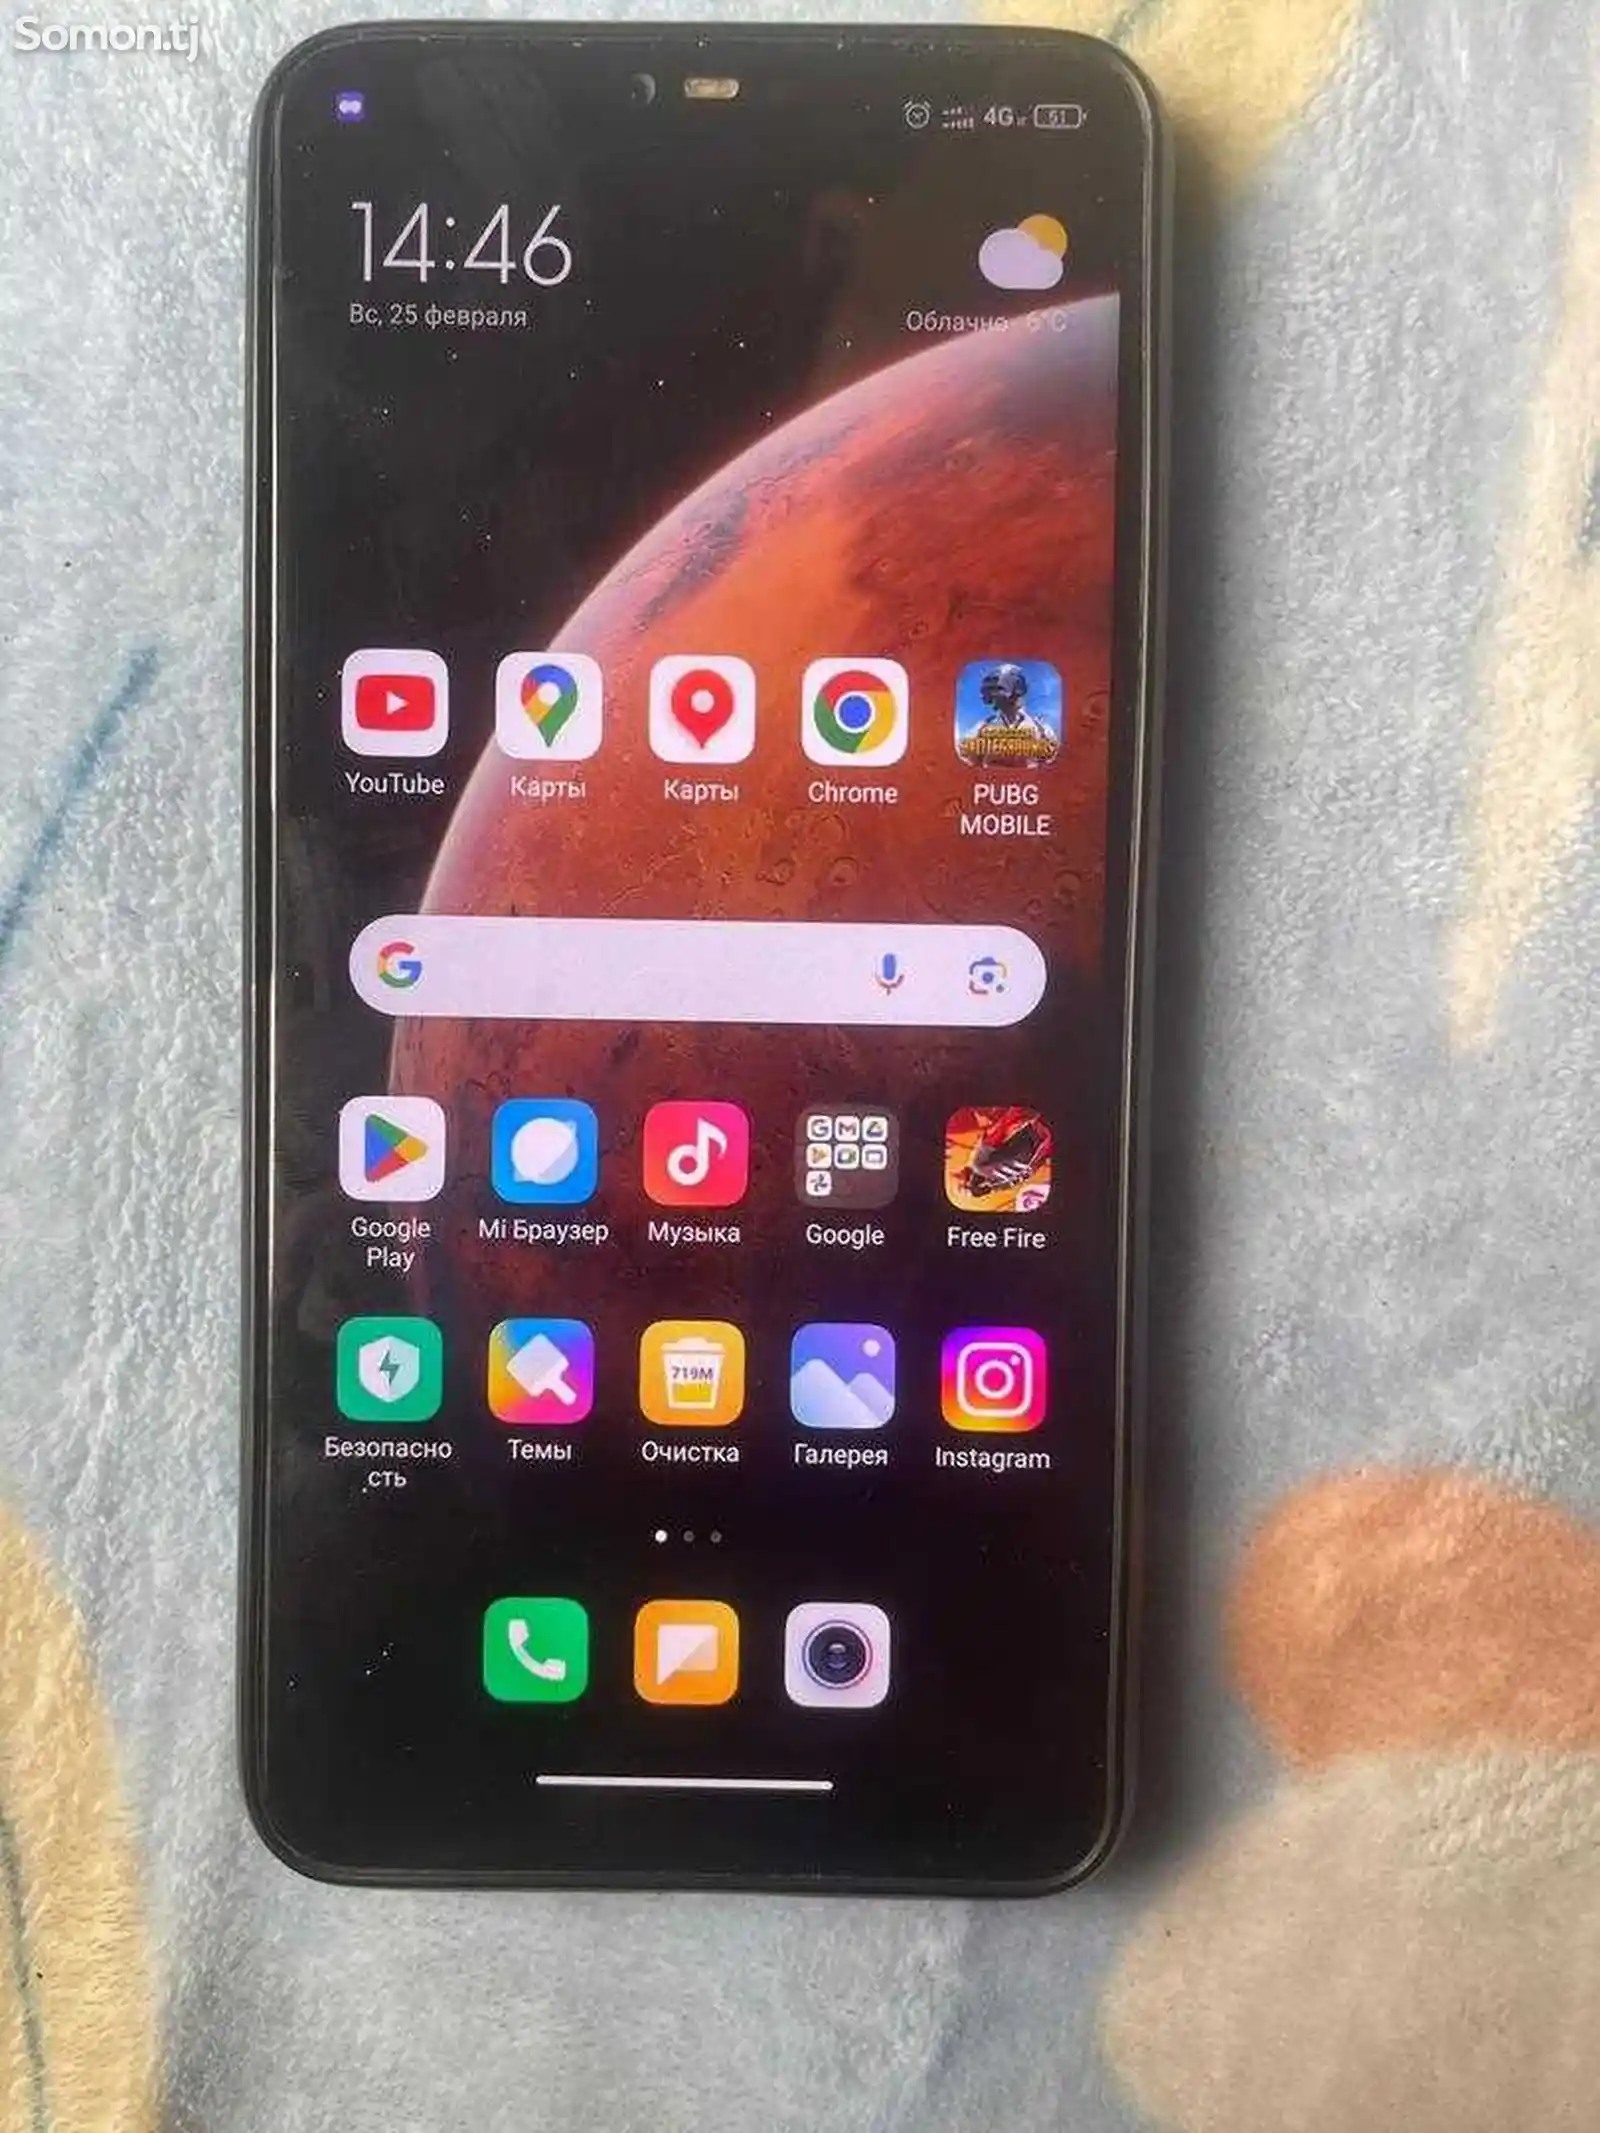 Xiaomi Mi 8 Lite-1